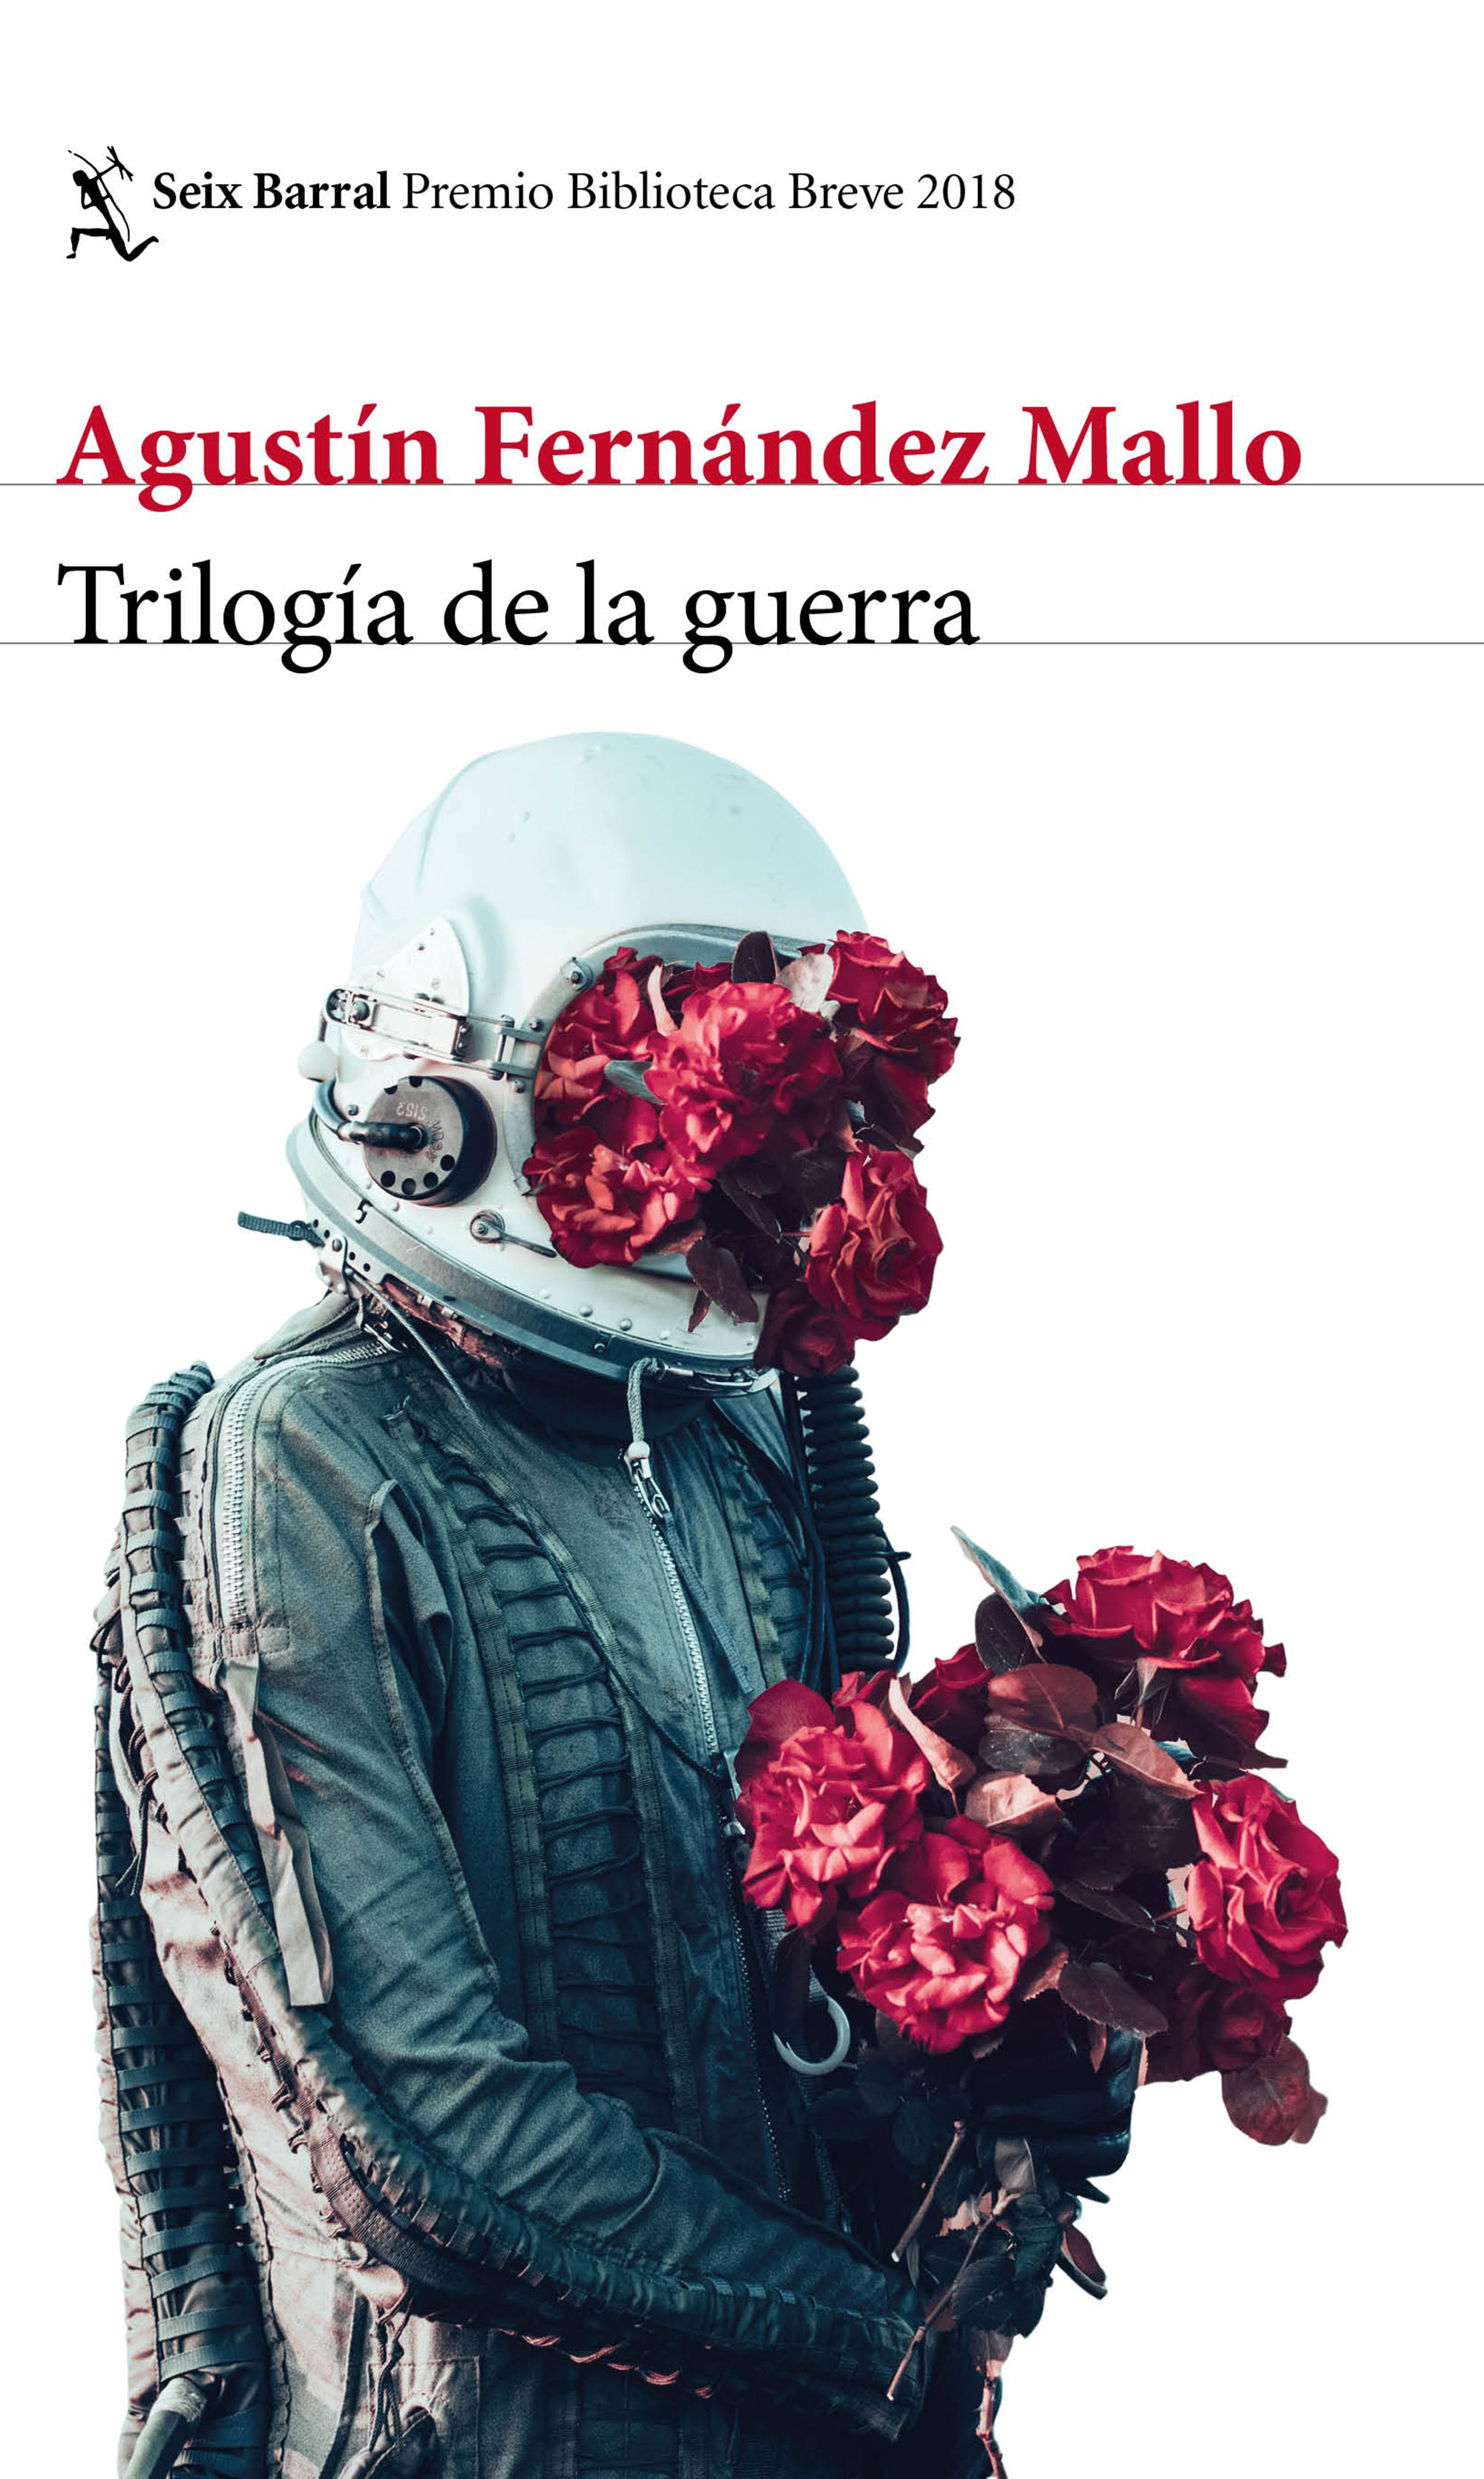 Imagen Trilogía de la guerra. Agustín Fernández Mallo